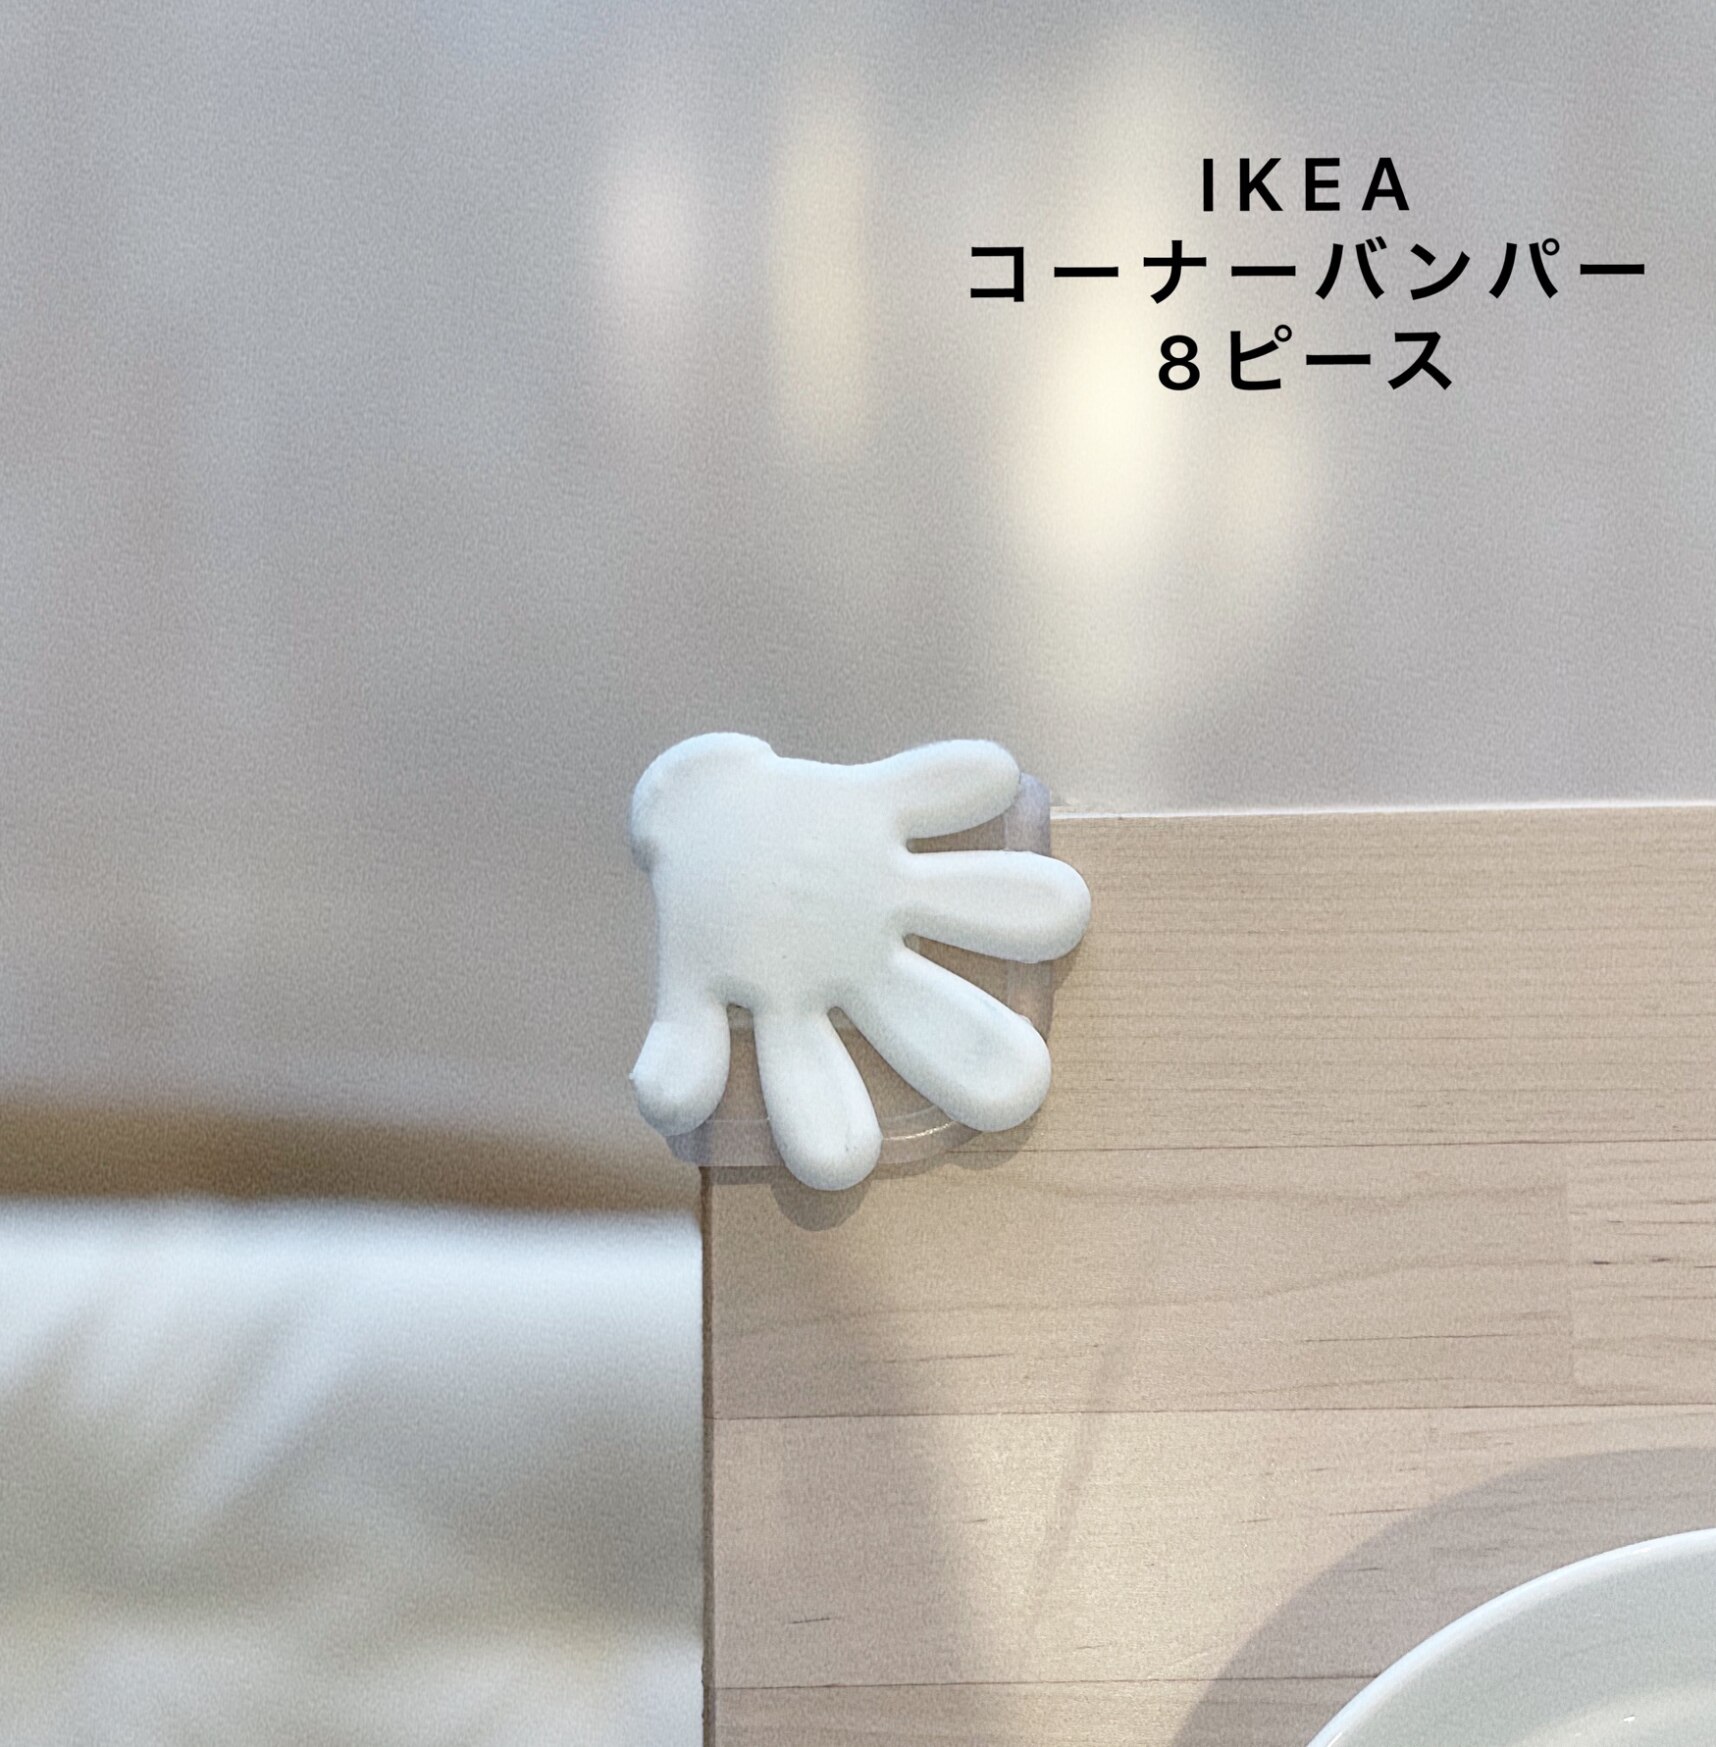 IKEA イケア コーナーバンパー 8ピース ホワイト 白 a50175605 PATRULL